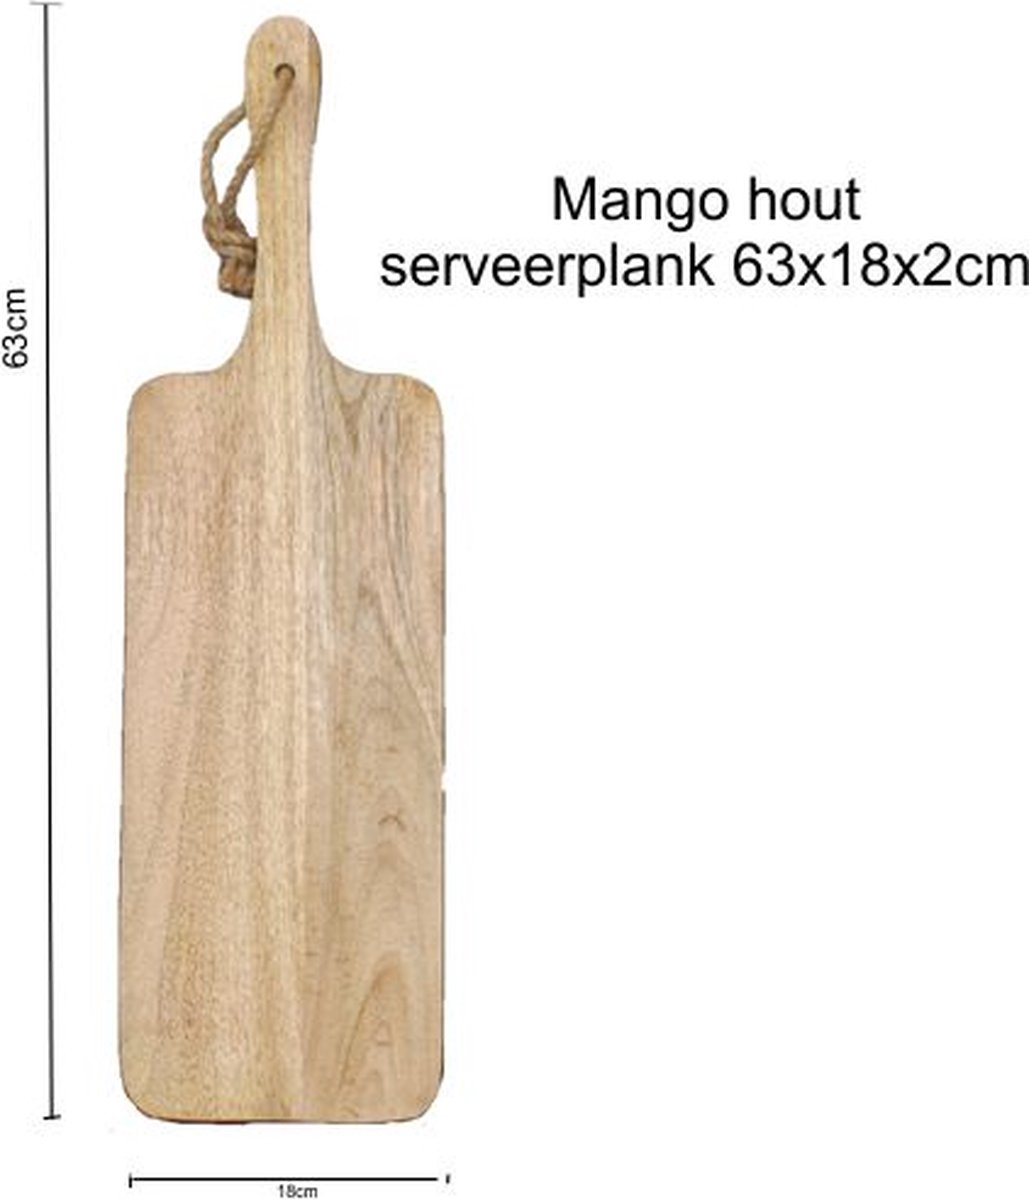 Lange serveerplank 63cm mango hout - broodplank - tapas plank - borrelplank - hout mango 63x18x2cm met touw